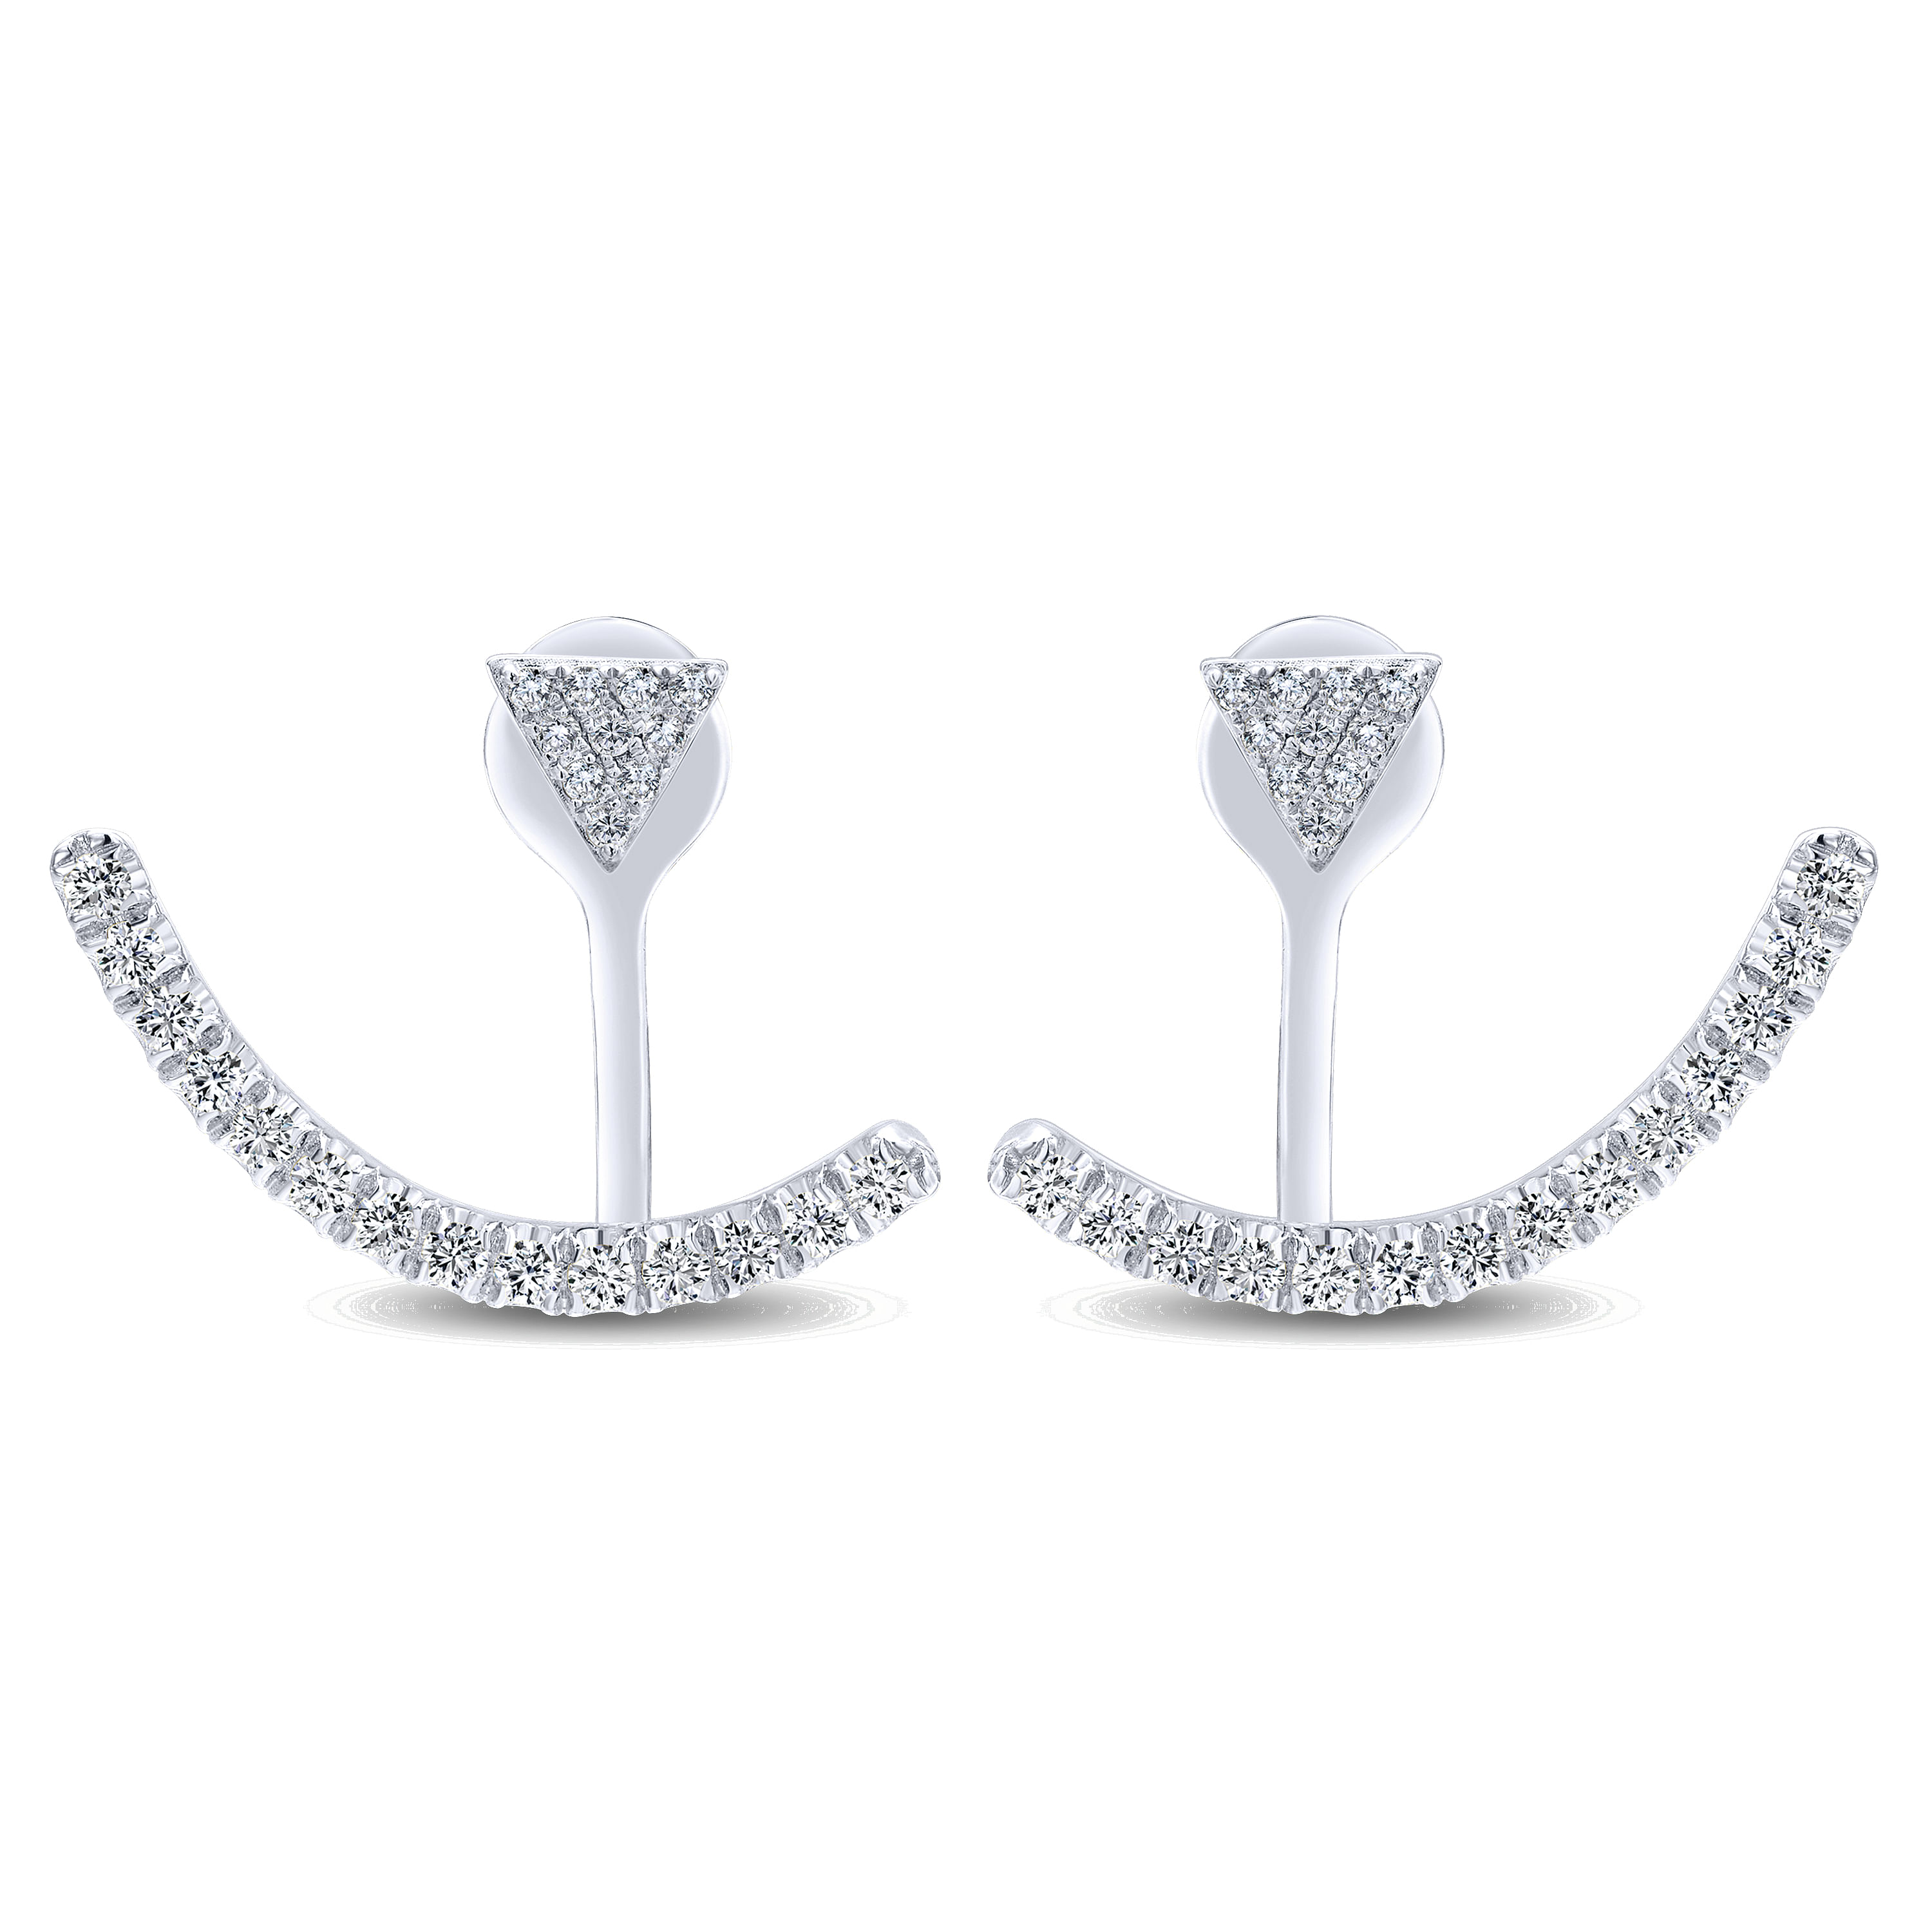 14K White Gold Peek A Boo Triangle and Curved Diamond Bar Earrings